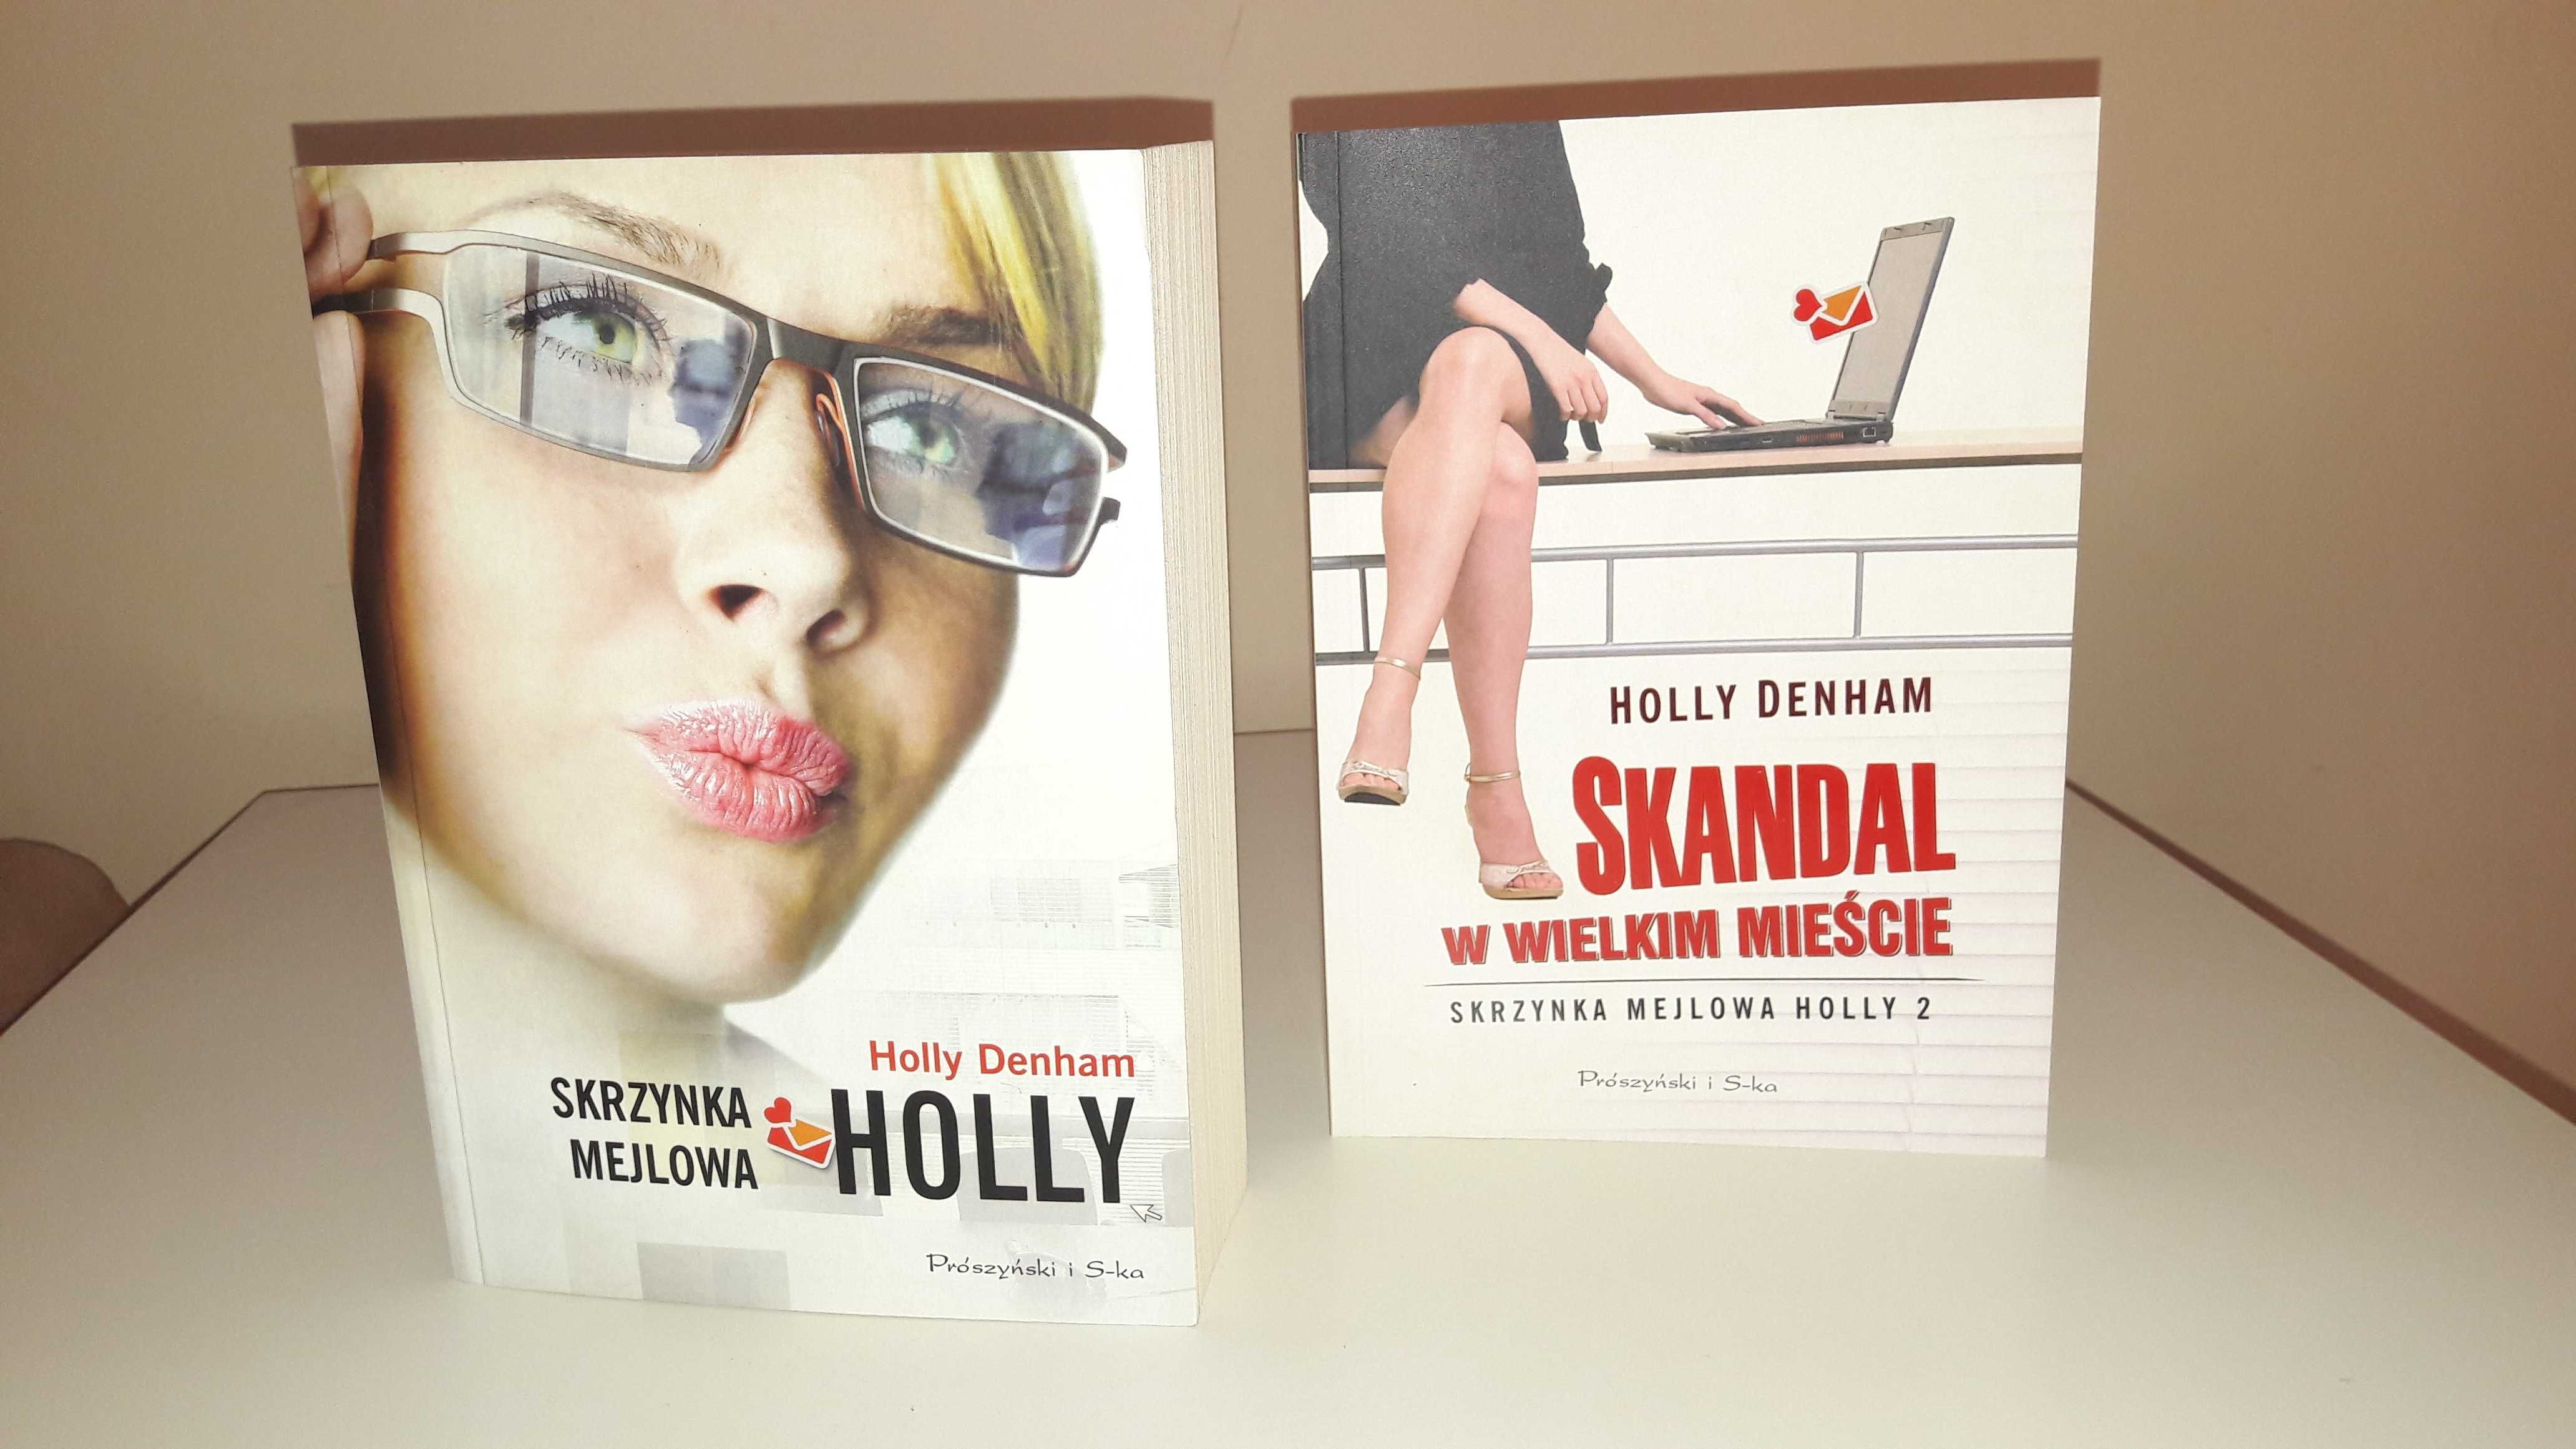 "Skrzynka Mejlowa Holly" i "Skandal...Skrzynka mejlowa Holly 2" Denham